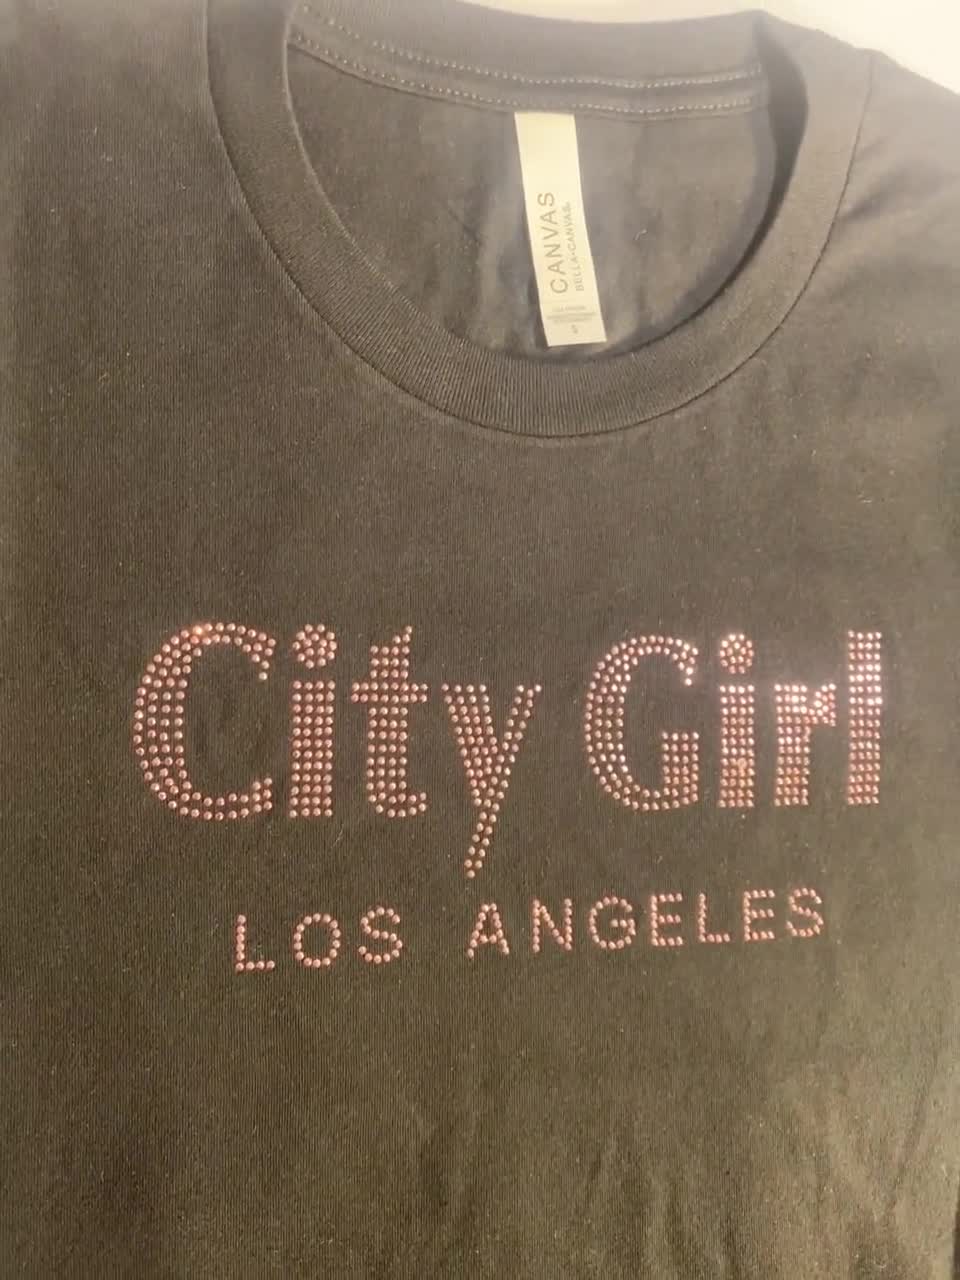 Los Angeles City College T-Shirt